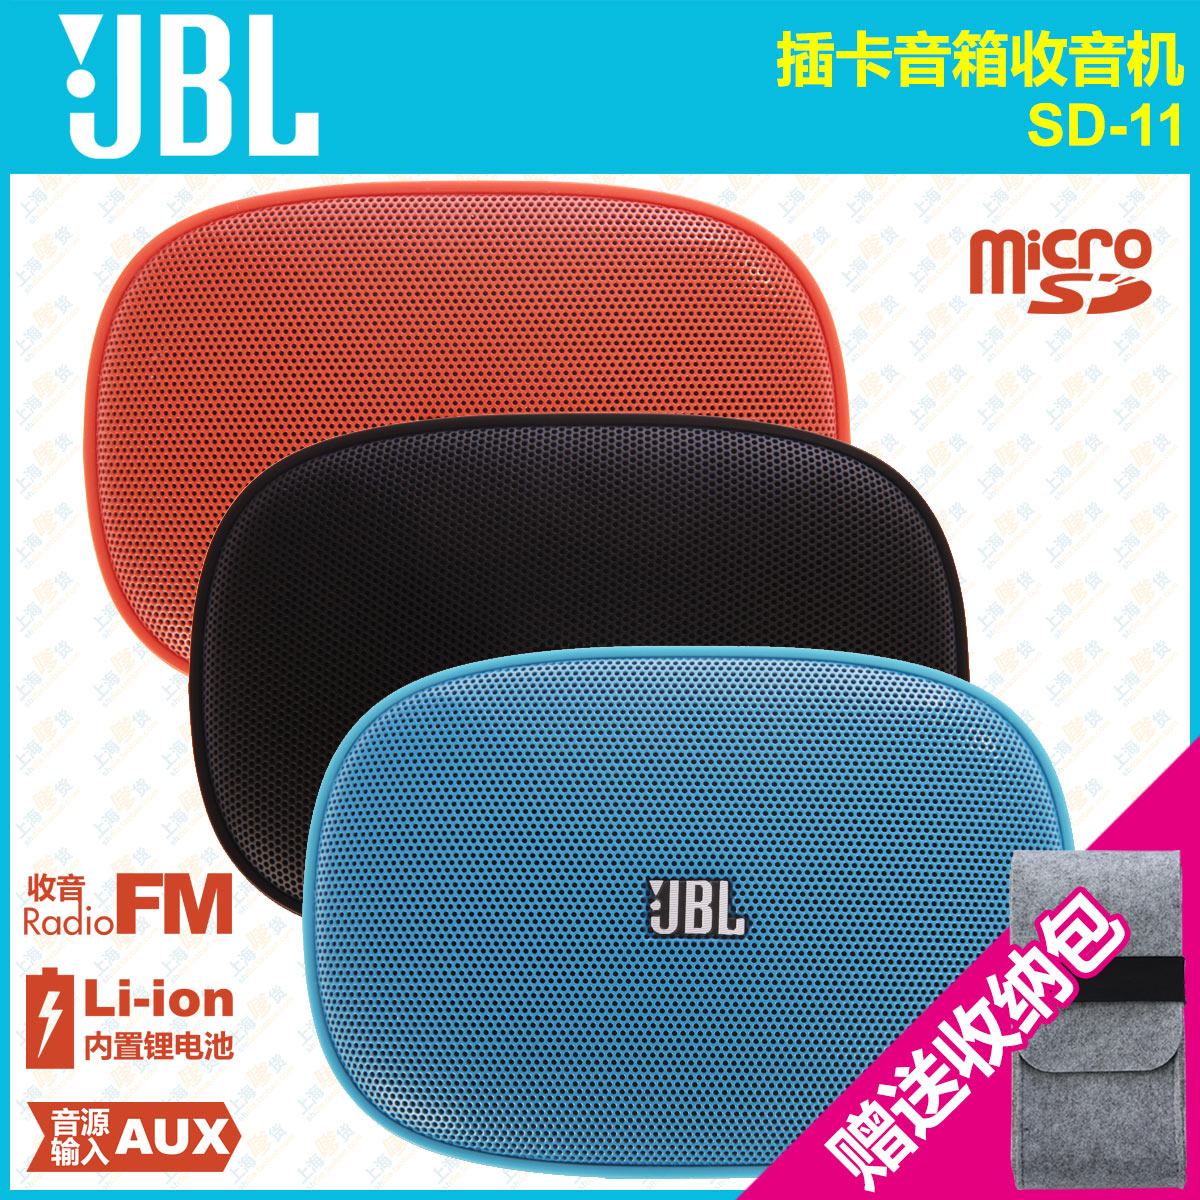 JBL SD-11 迷你便携多功能音箱音响重低音效调频TF插卡收音机